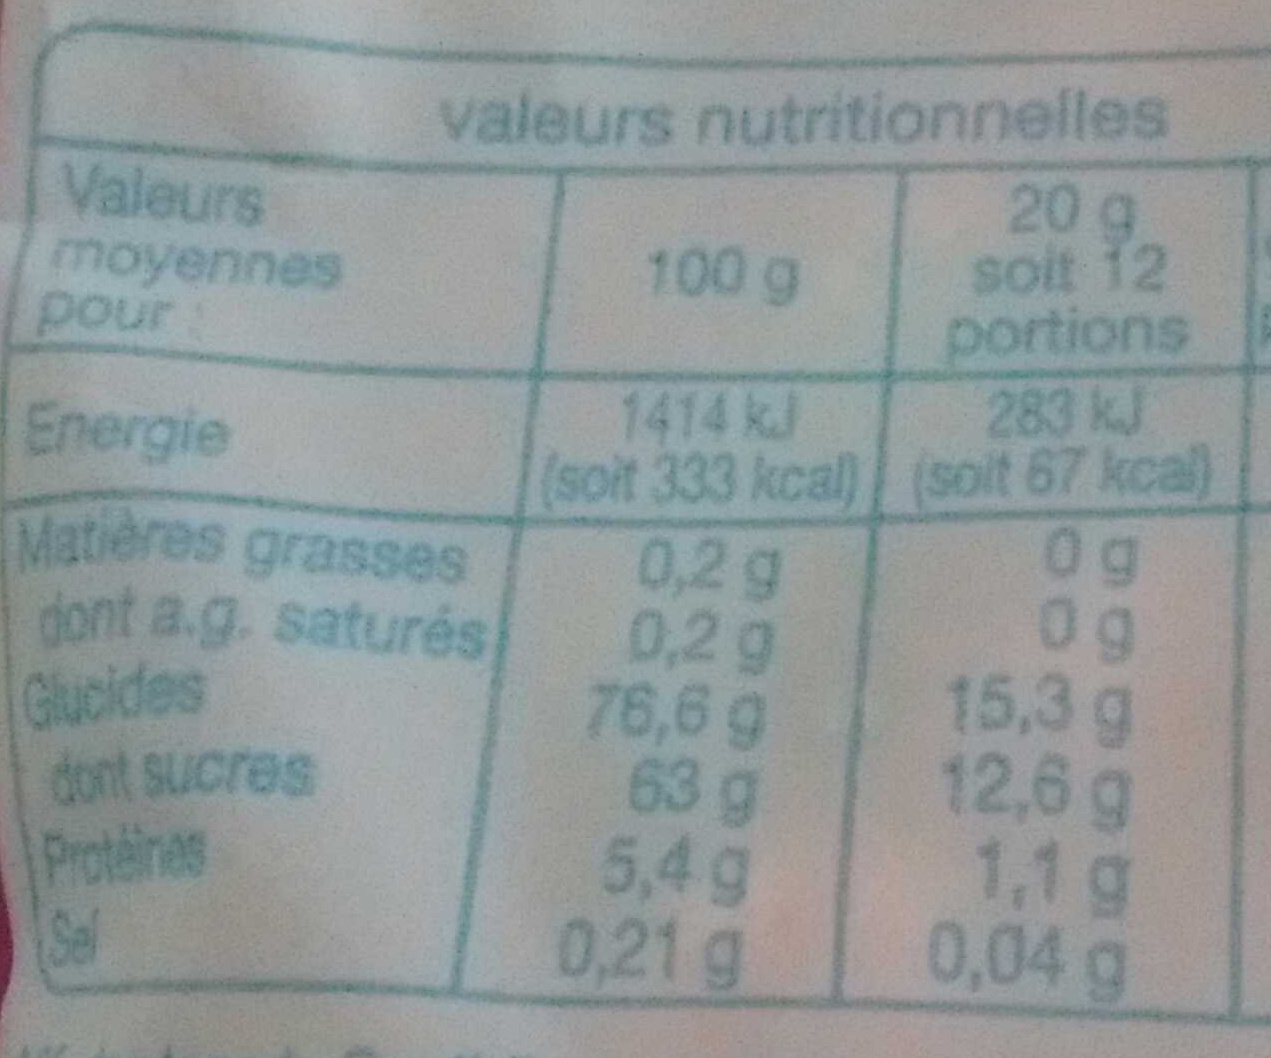 Bouteilles Bubble - Dados nutricionais - fr